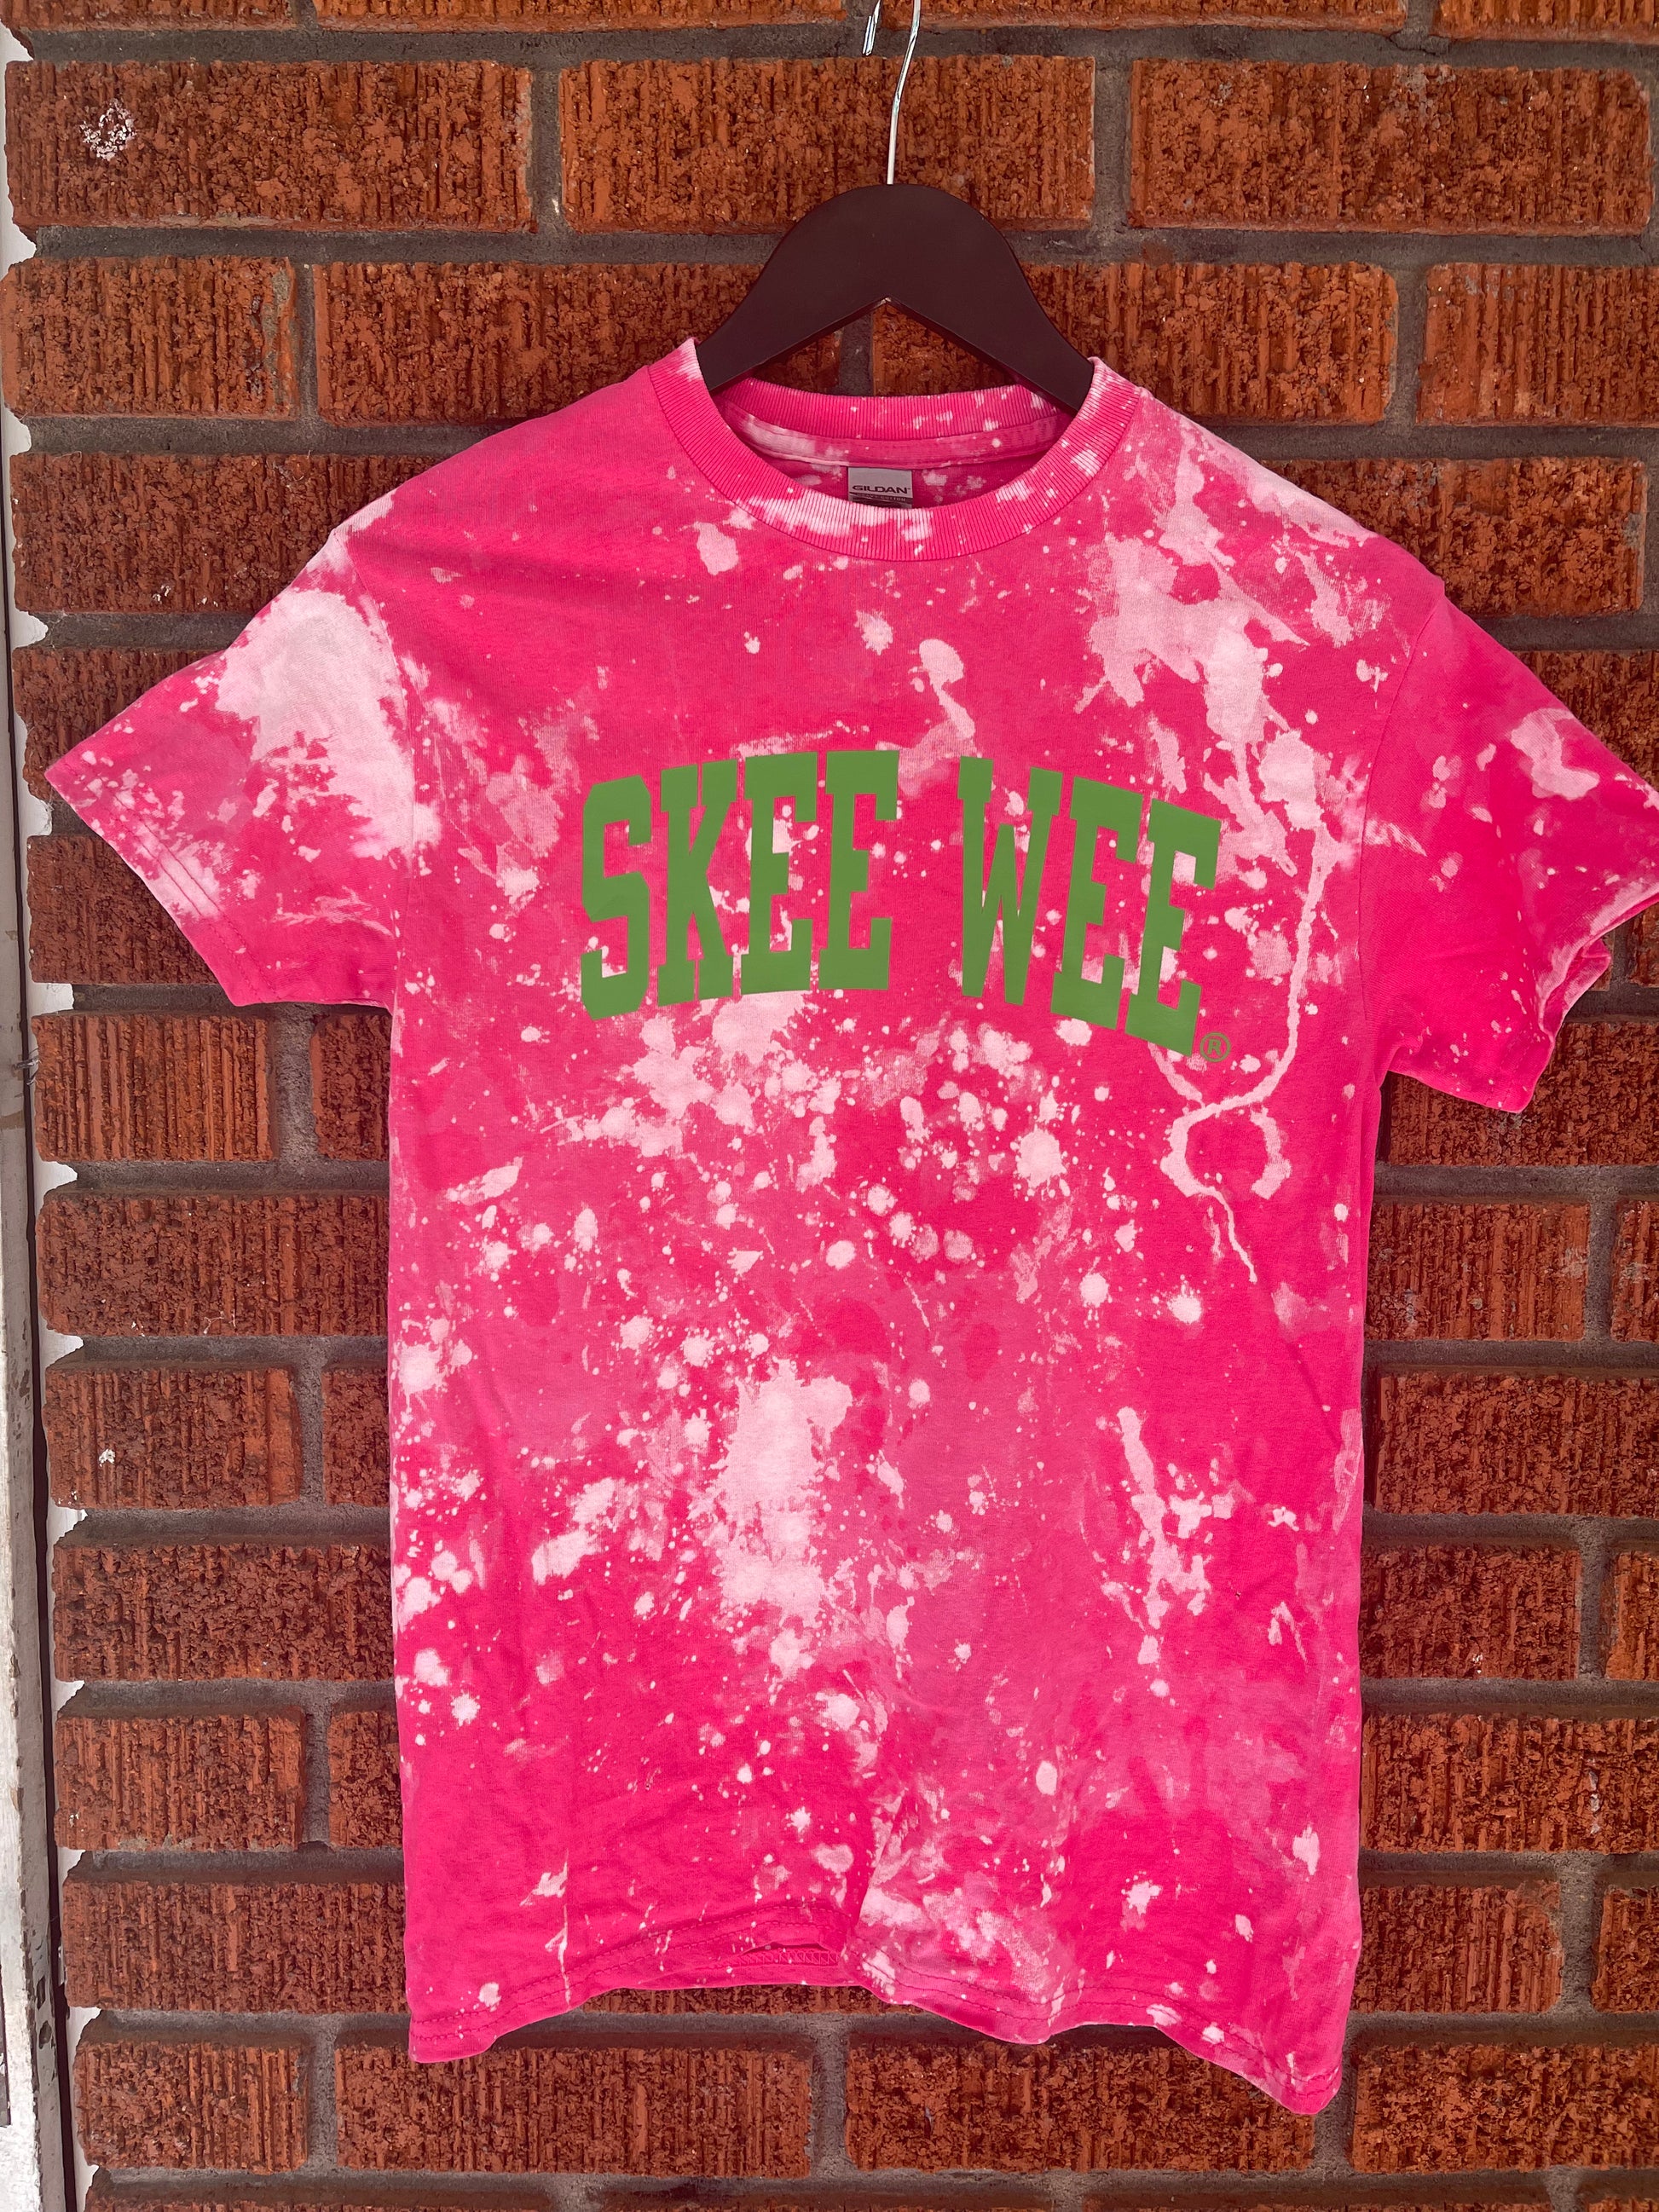 The Pink Skee Wee Crew Neck T-shirt - [CCL Designs] - AKA Alpha Kappa Alpha Pink and Green handmade hand bleach tie dye